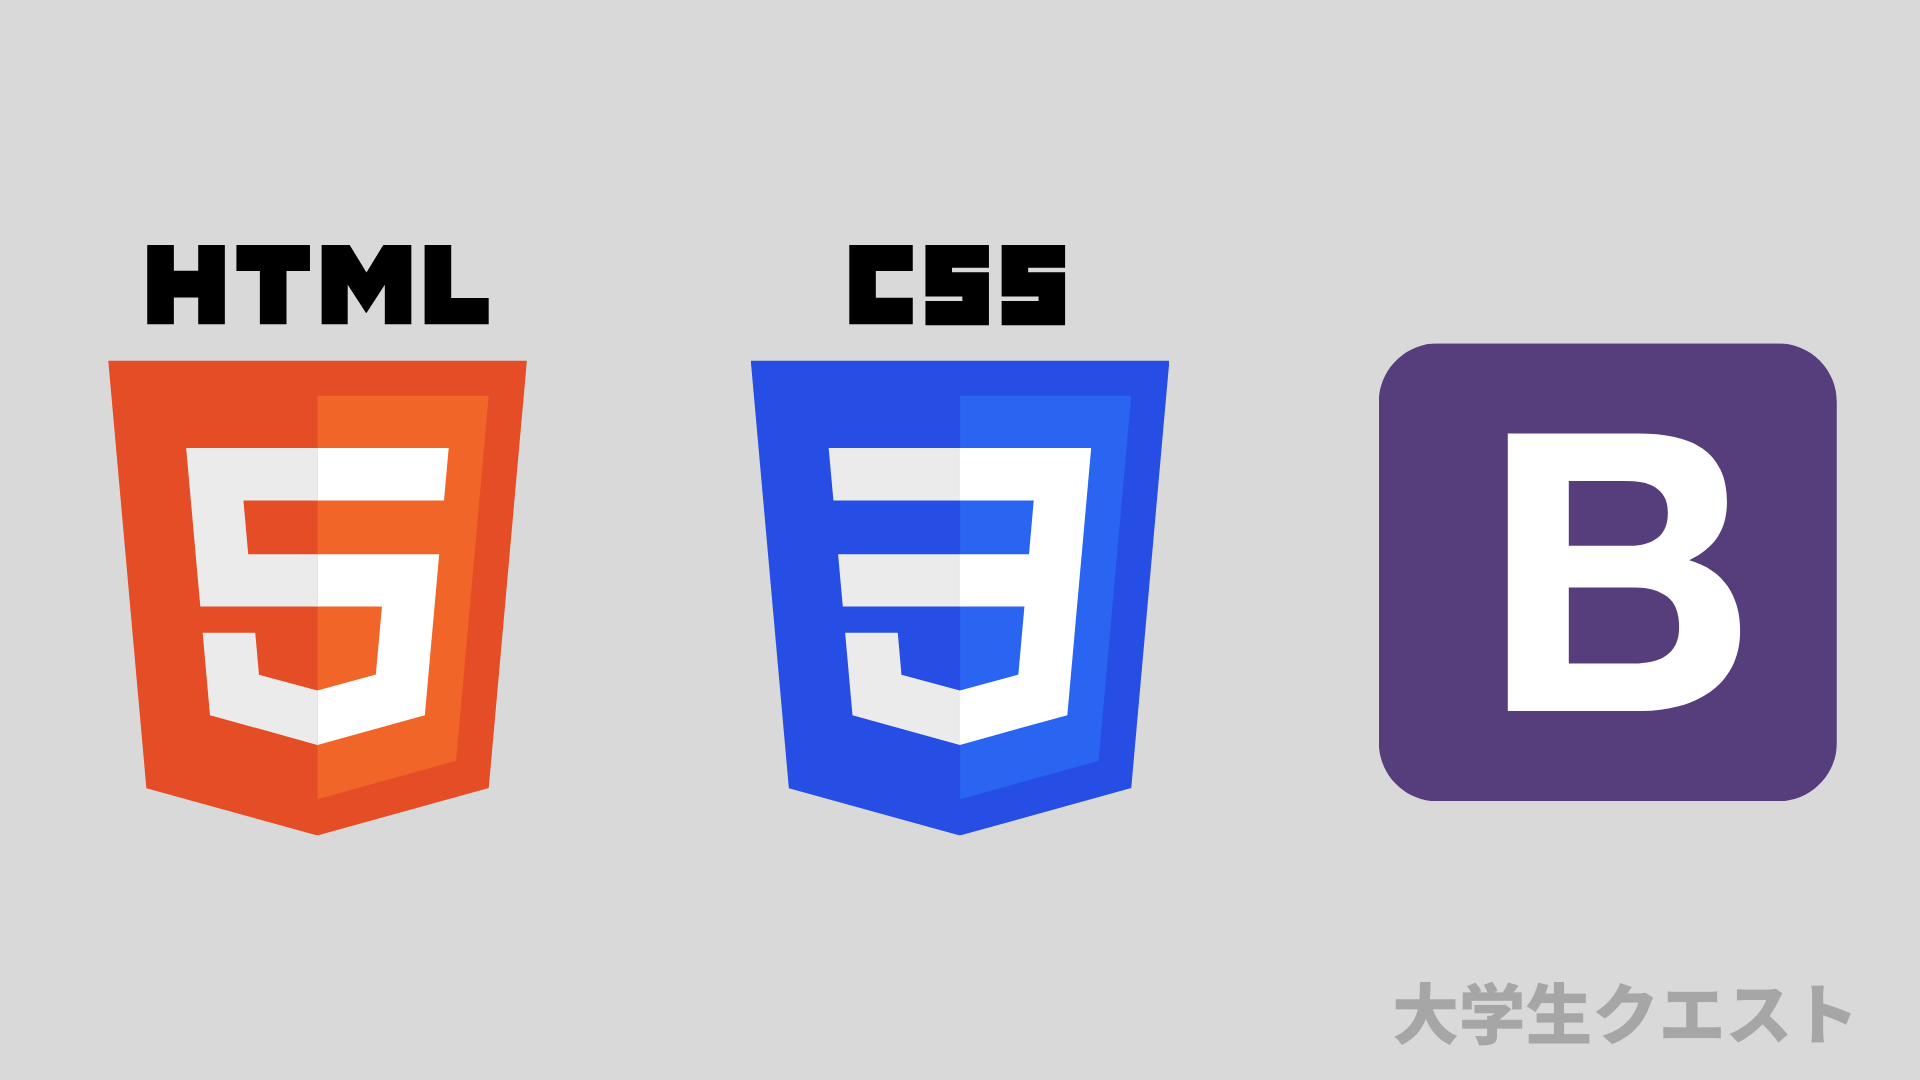 HTMLとCSSとBootstrapのロゴ